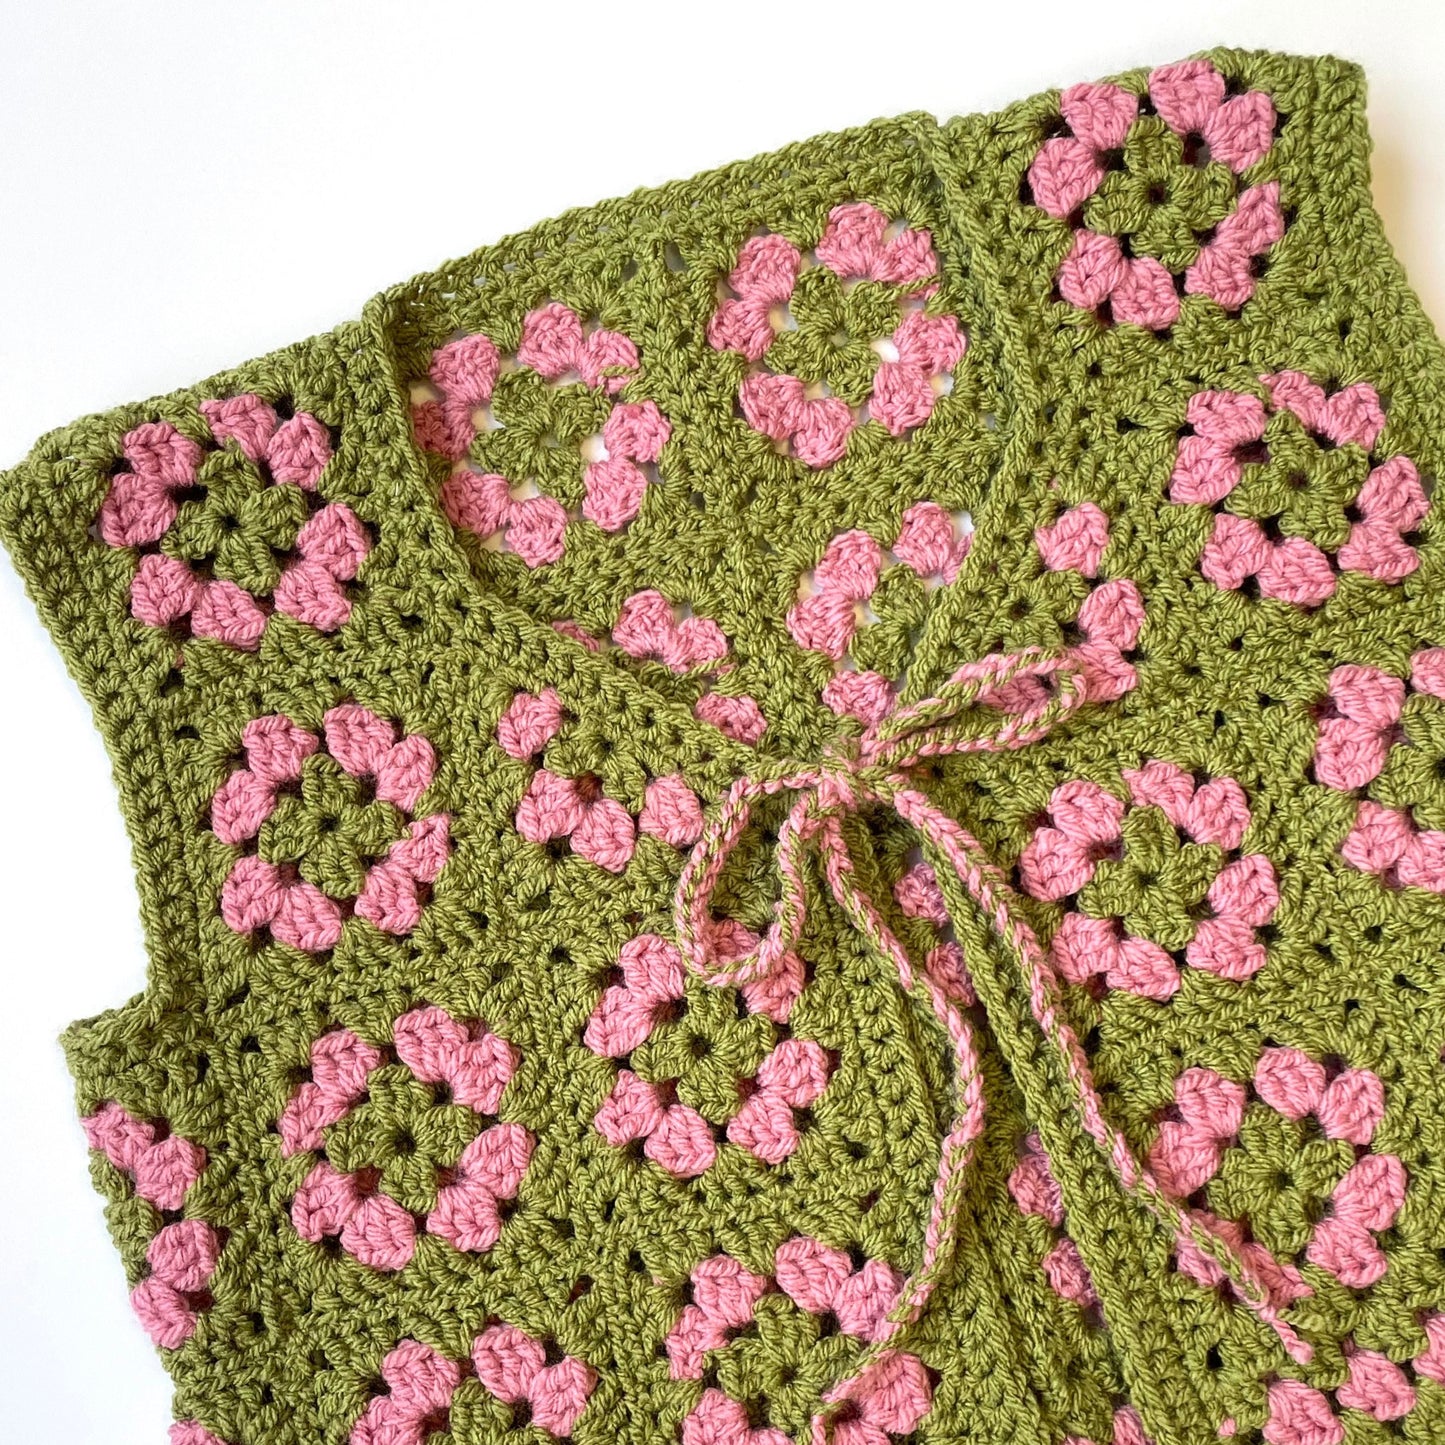 Patchwork Olive / Pink Crochet Vest - Size XS/S